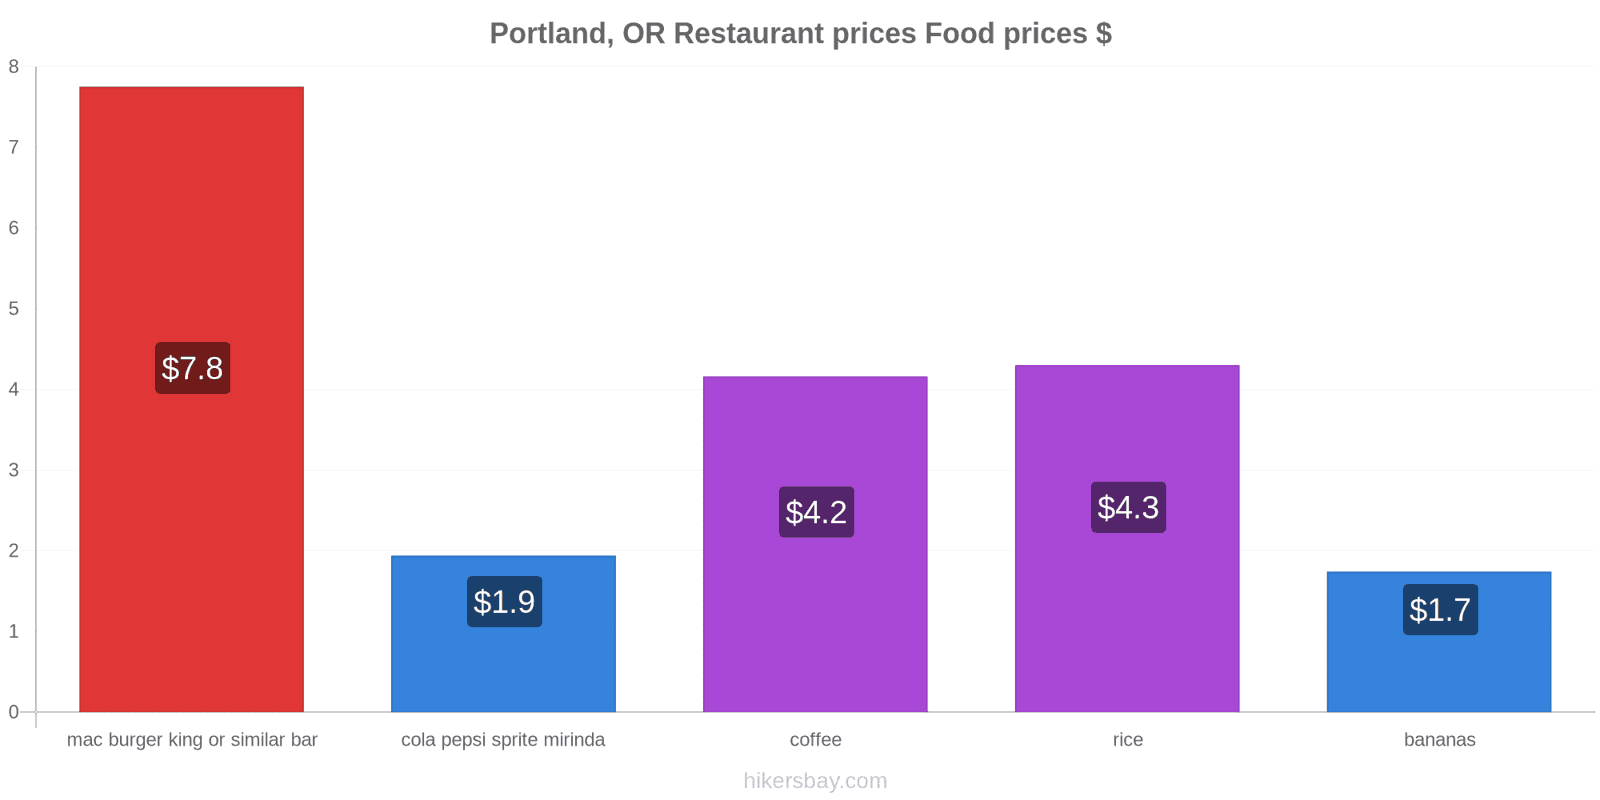 Portland, OR price changes hikersbay.com